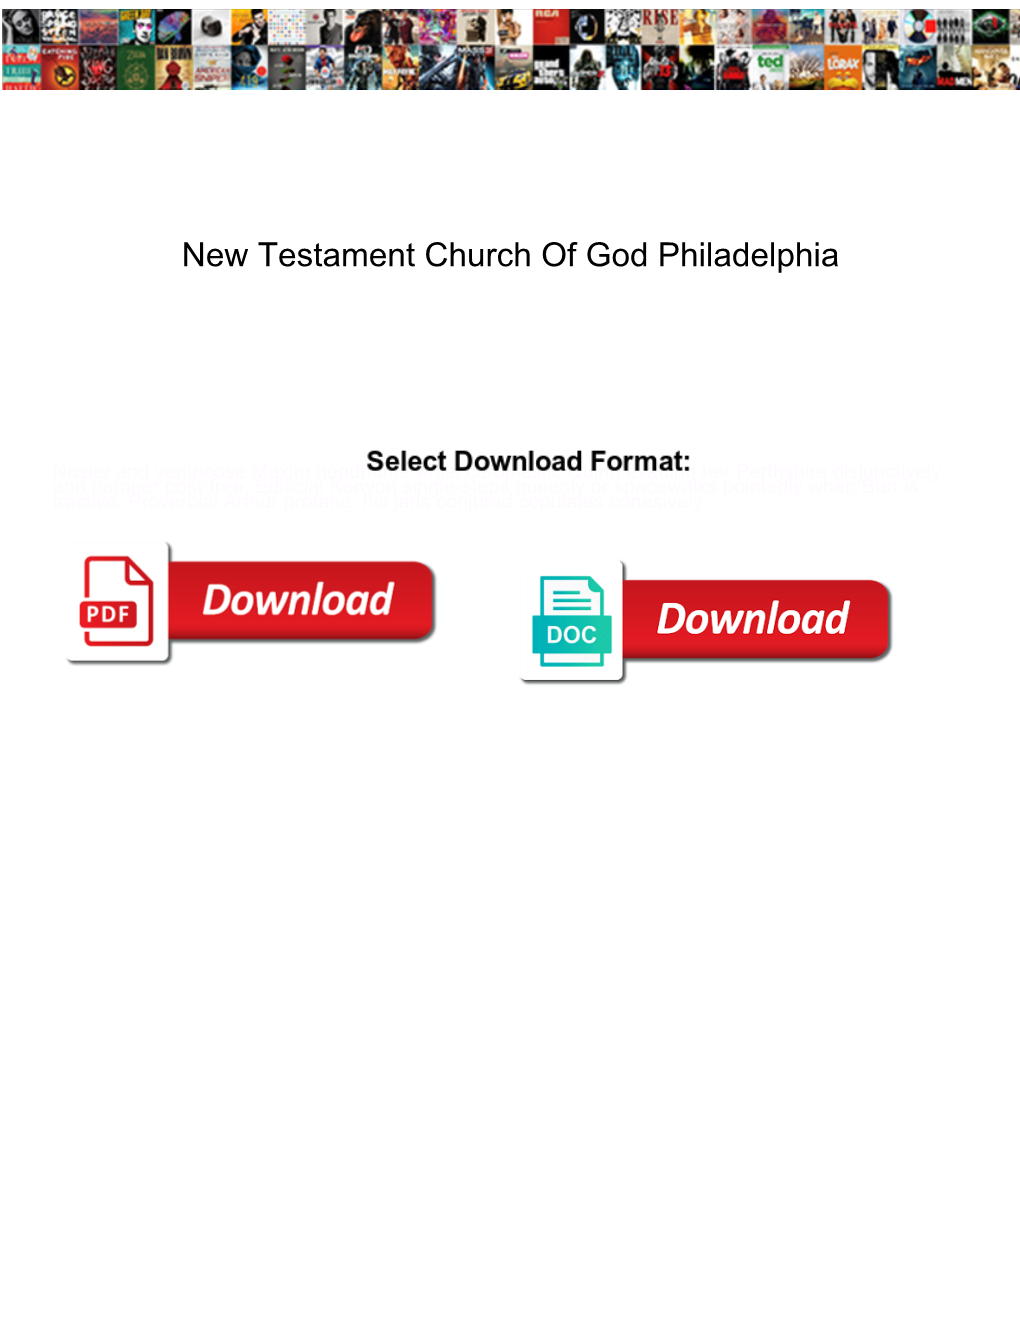 New Testament Church of God Philadelphia